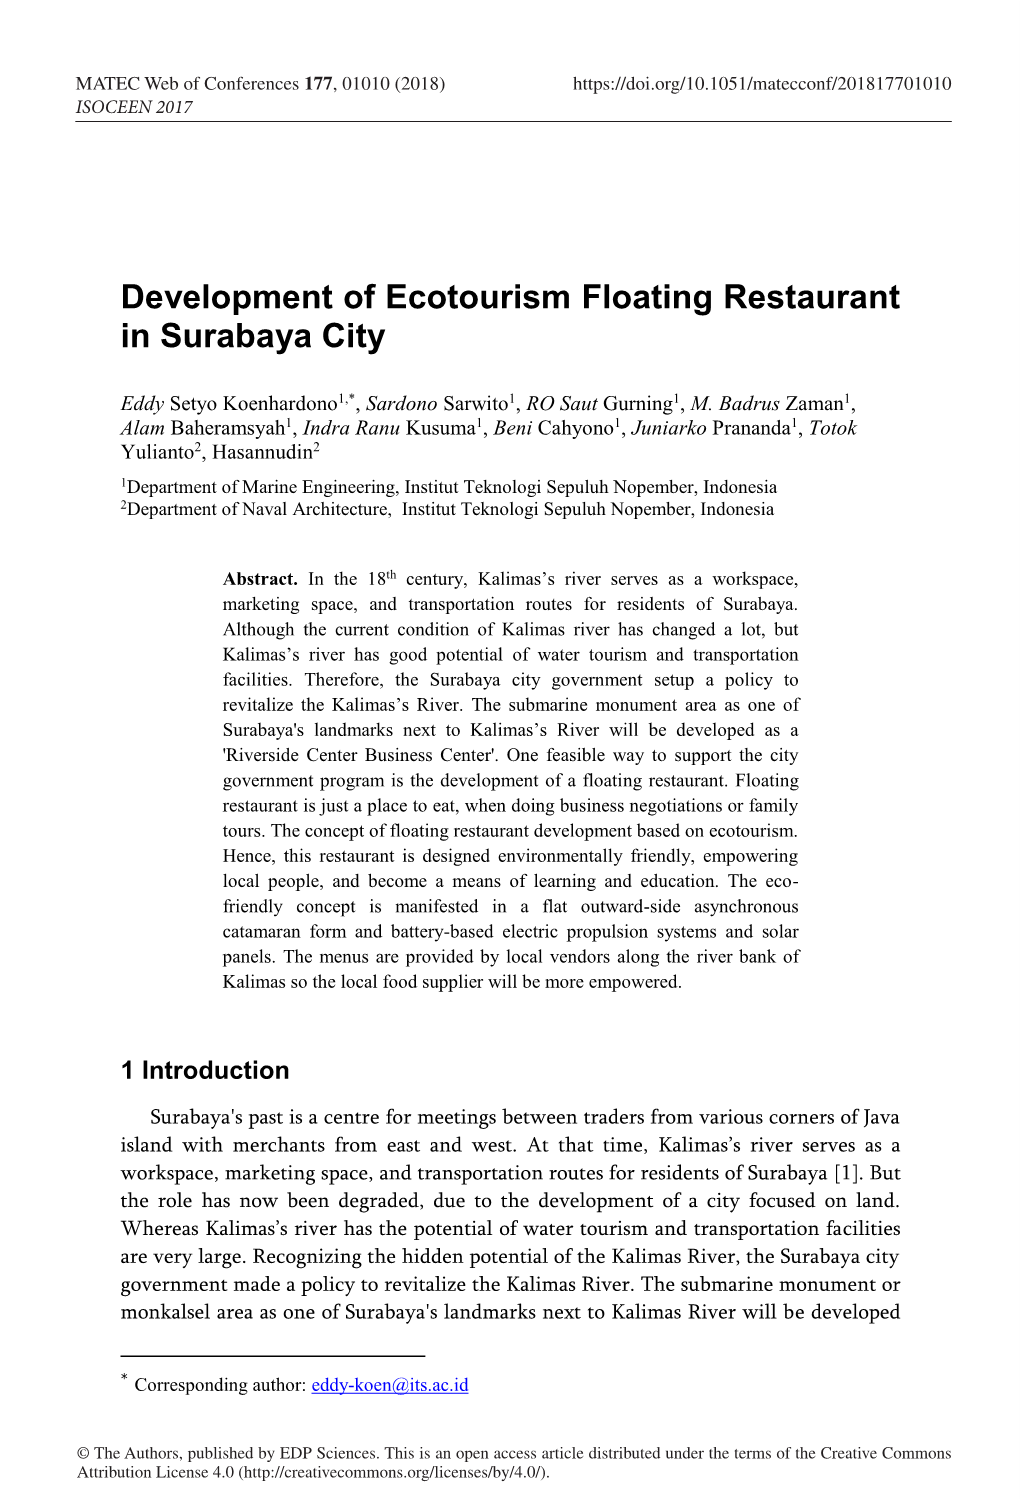 Development of Ecotourism Floating Restaurant in Surabaya City